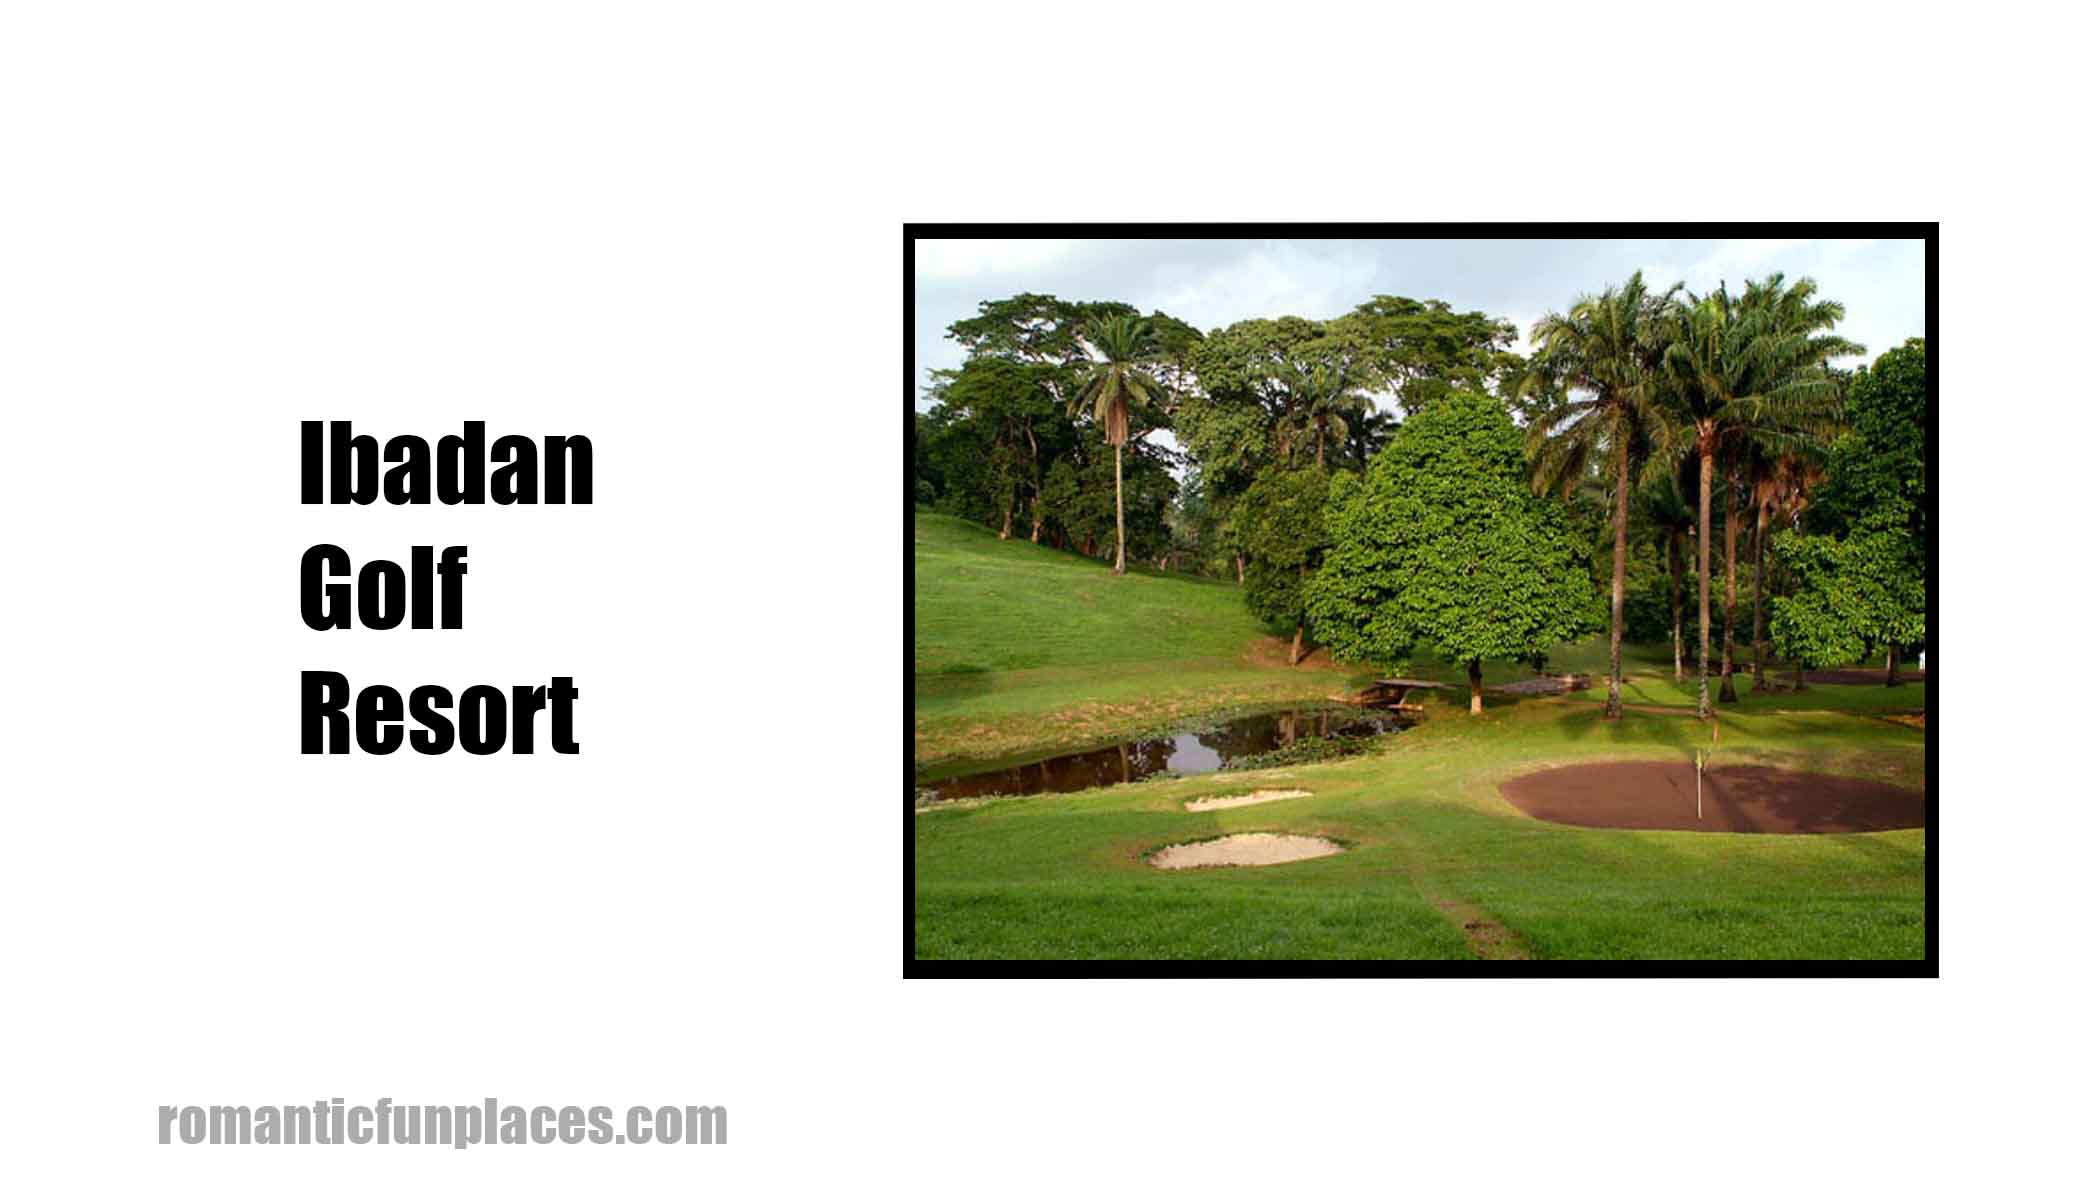 Ibadan Golf Resort